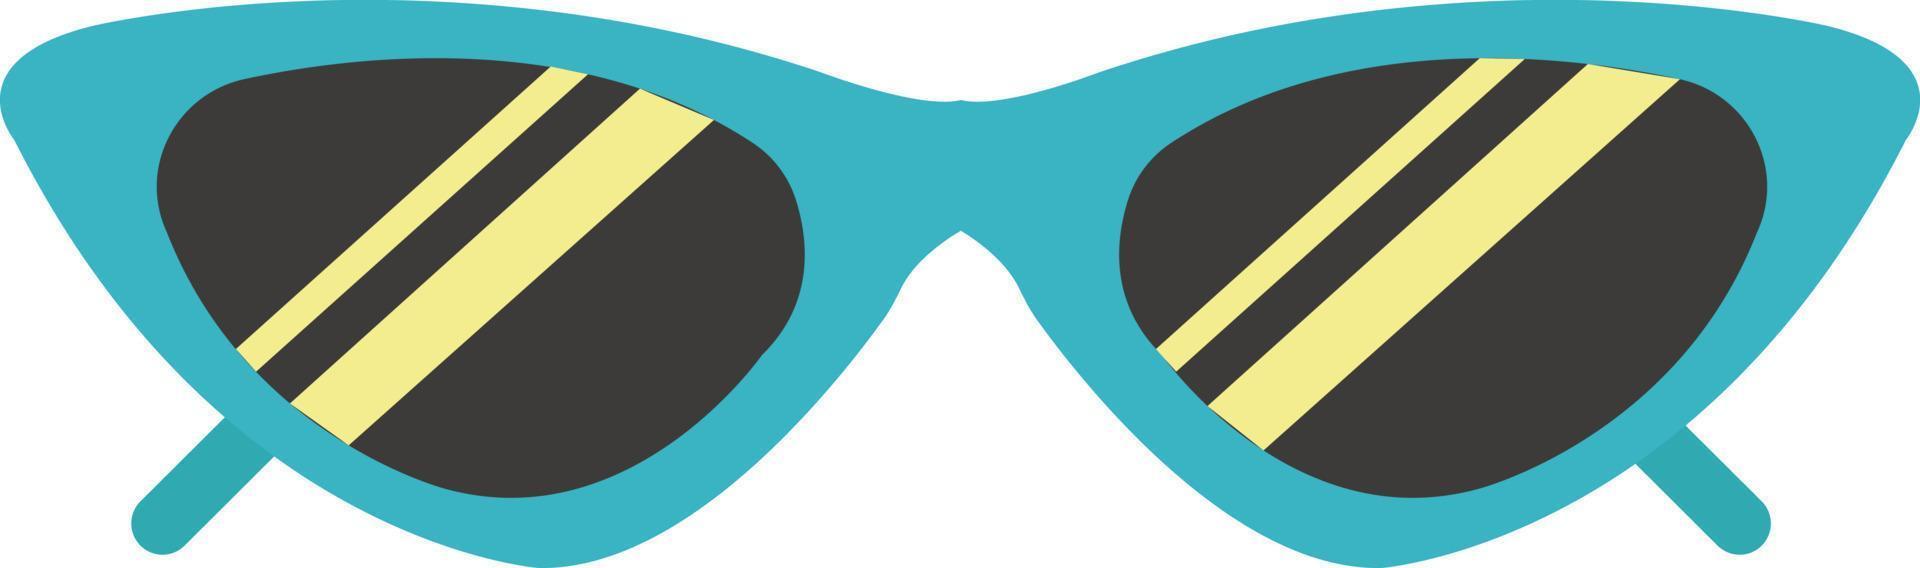 Sunglasses, illustration, vector on white background.